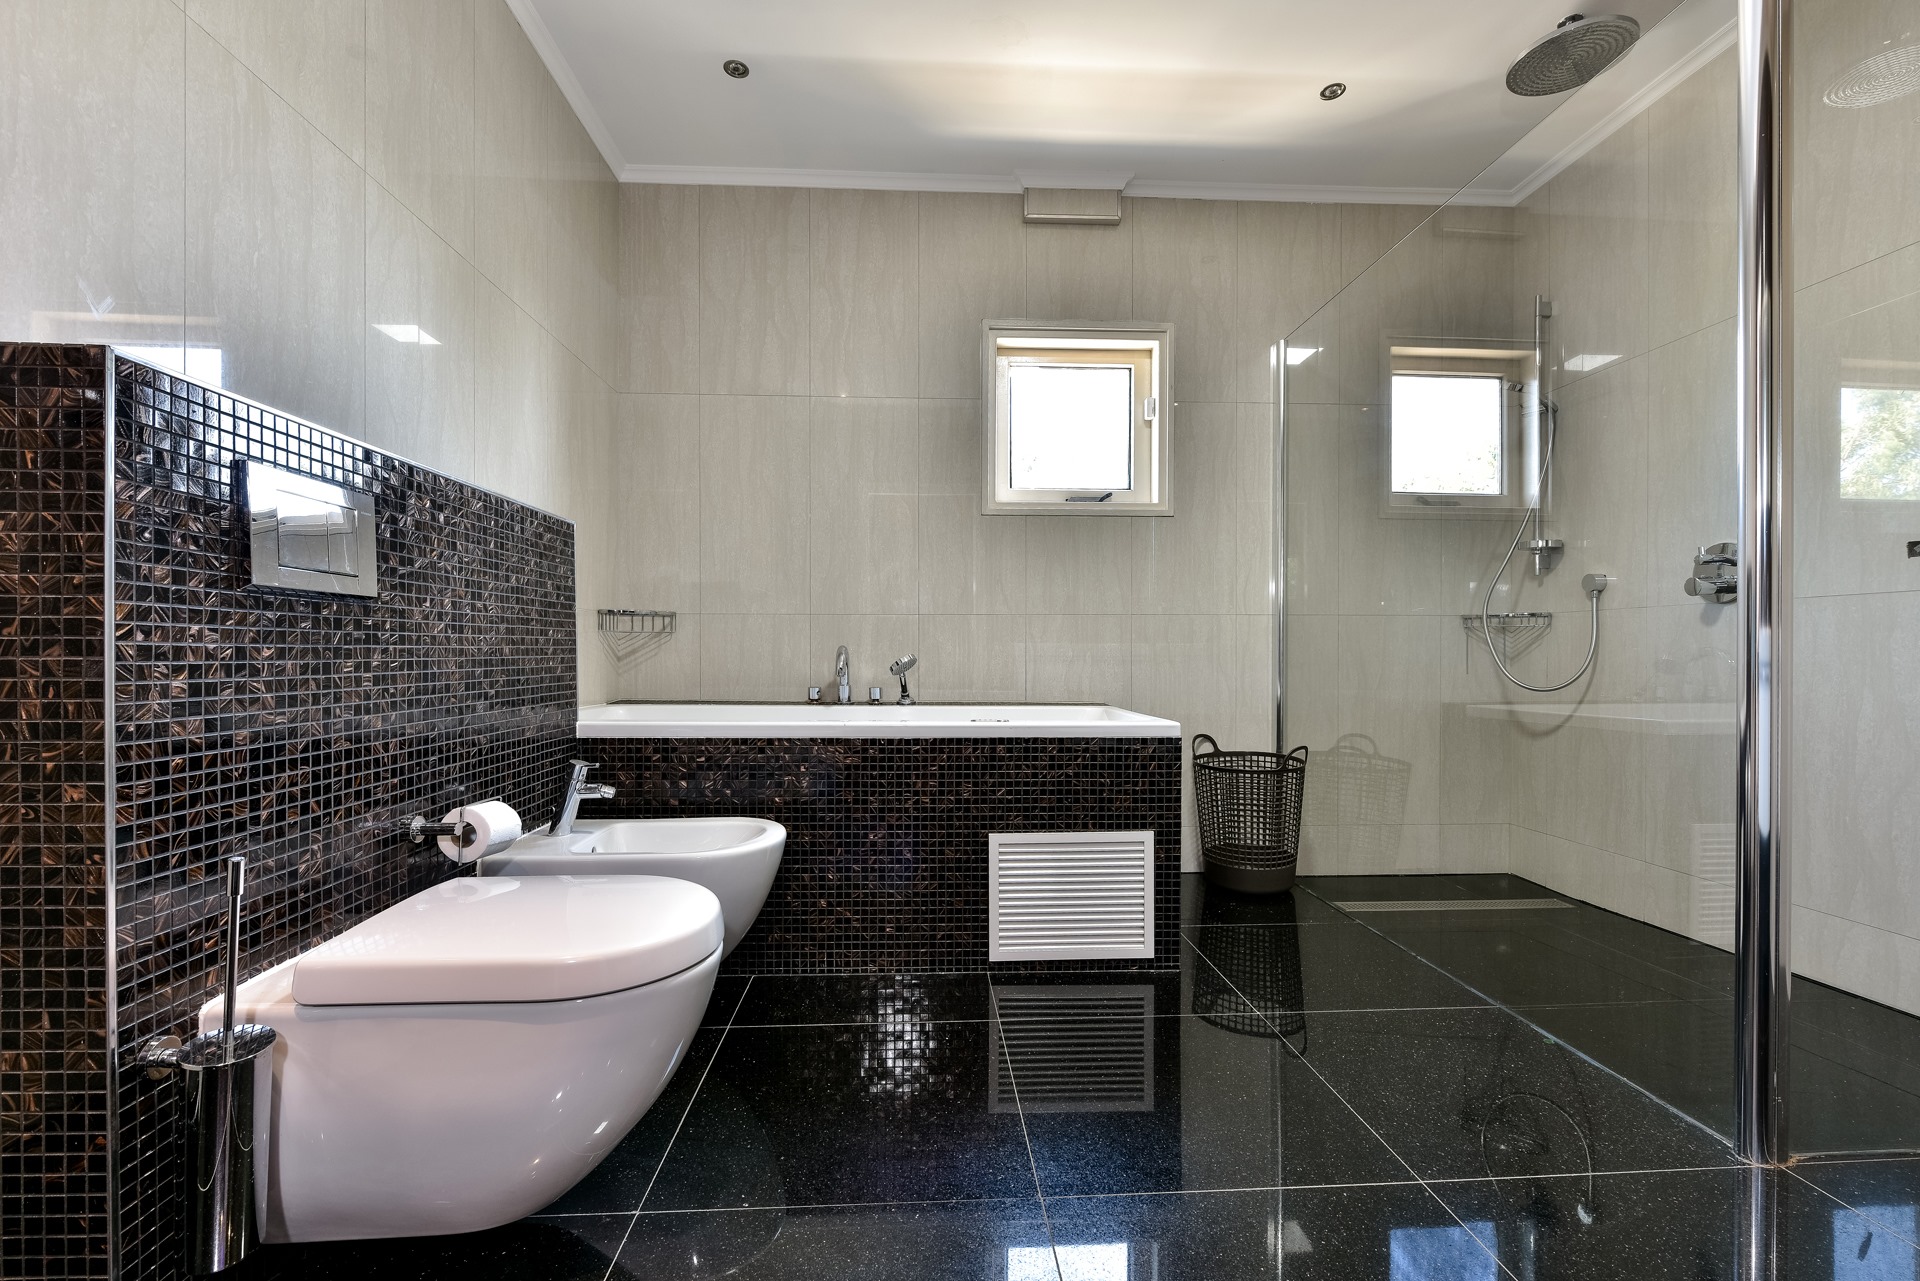 Luxurious bathroom at La Casa Piu Bella, offering elegance and comfort.